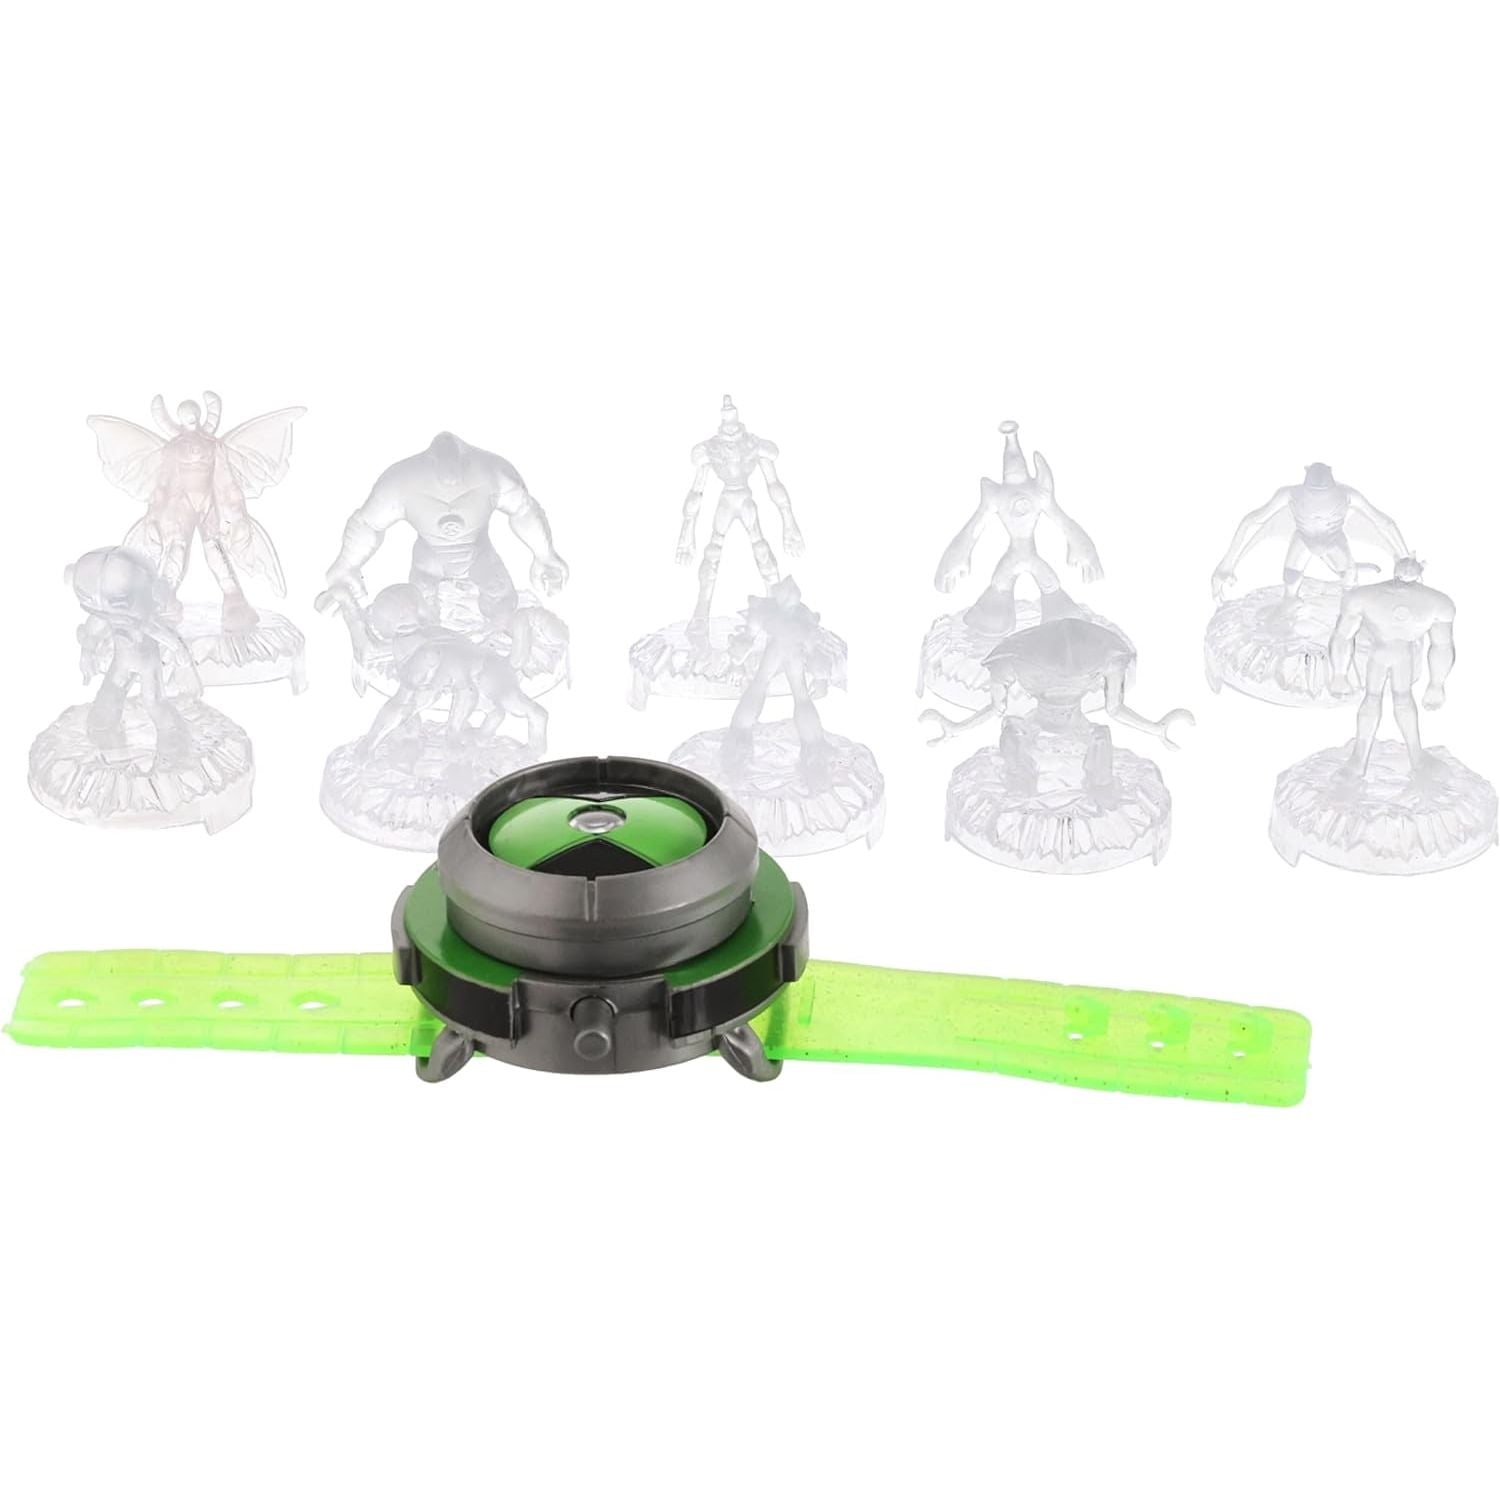 Ben 10 Ultimate Alien Watch Toy - white